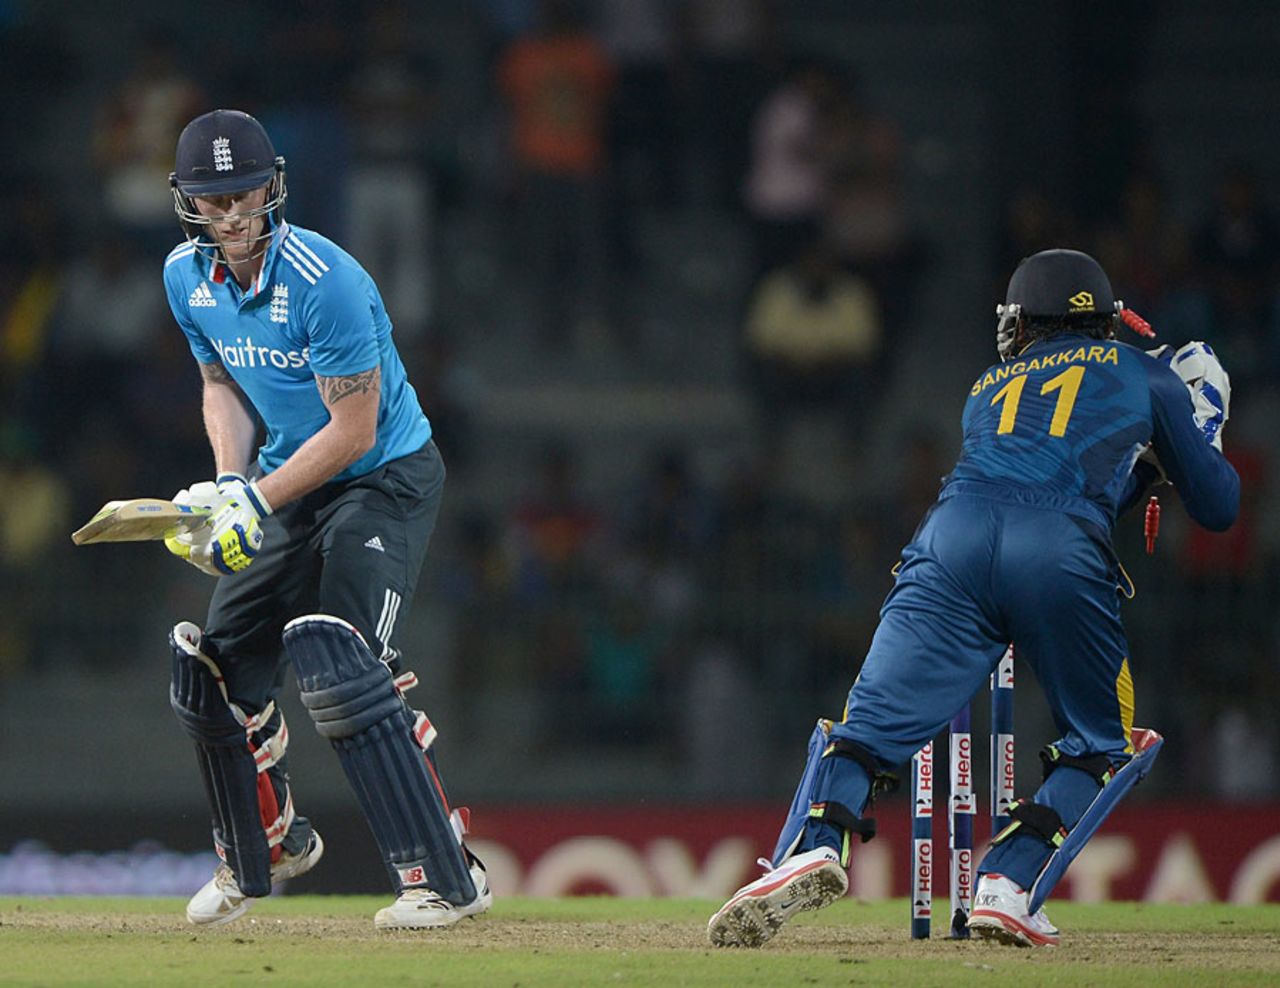 Ben Stokes struggled against spin and was stumped, Sri Lanka v England, 1st ODI, Colombo, November 26, 2014